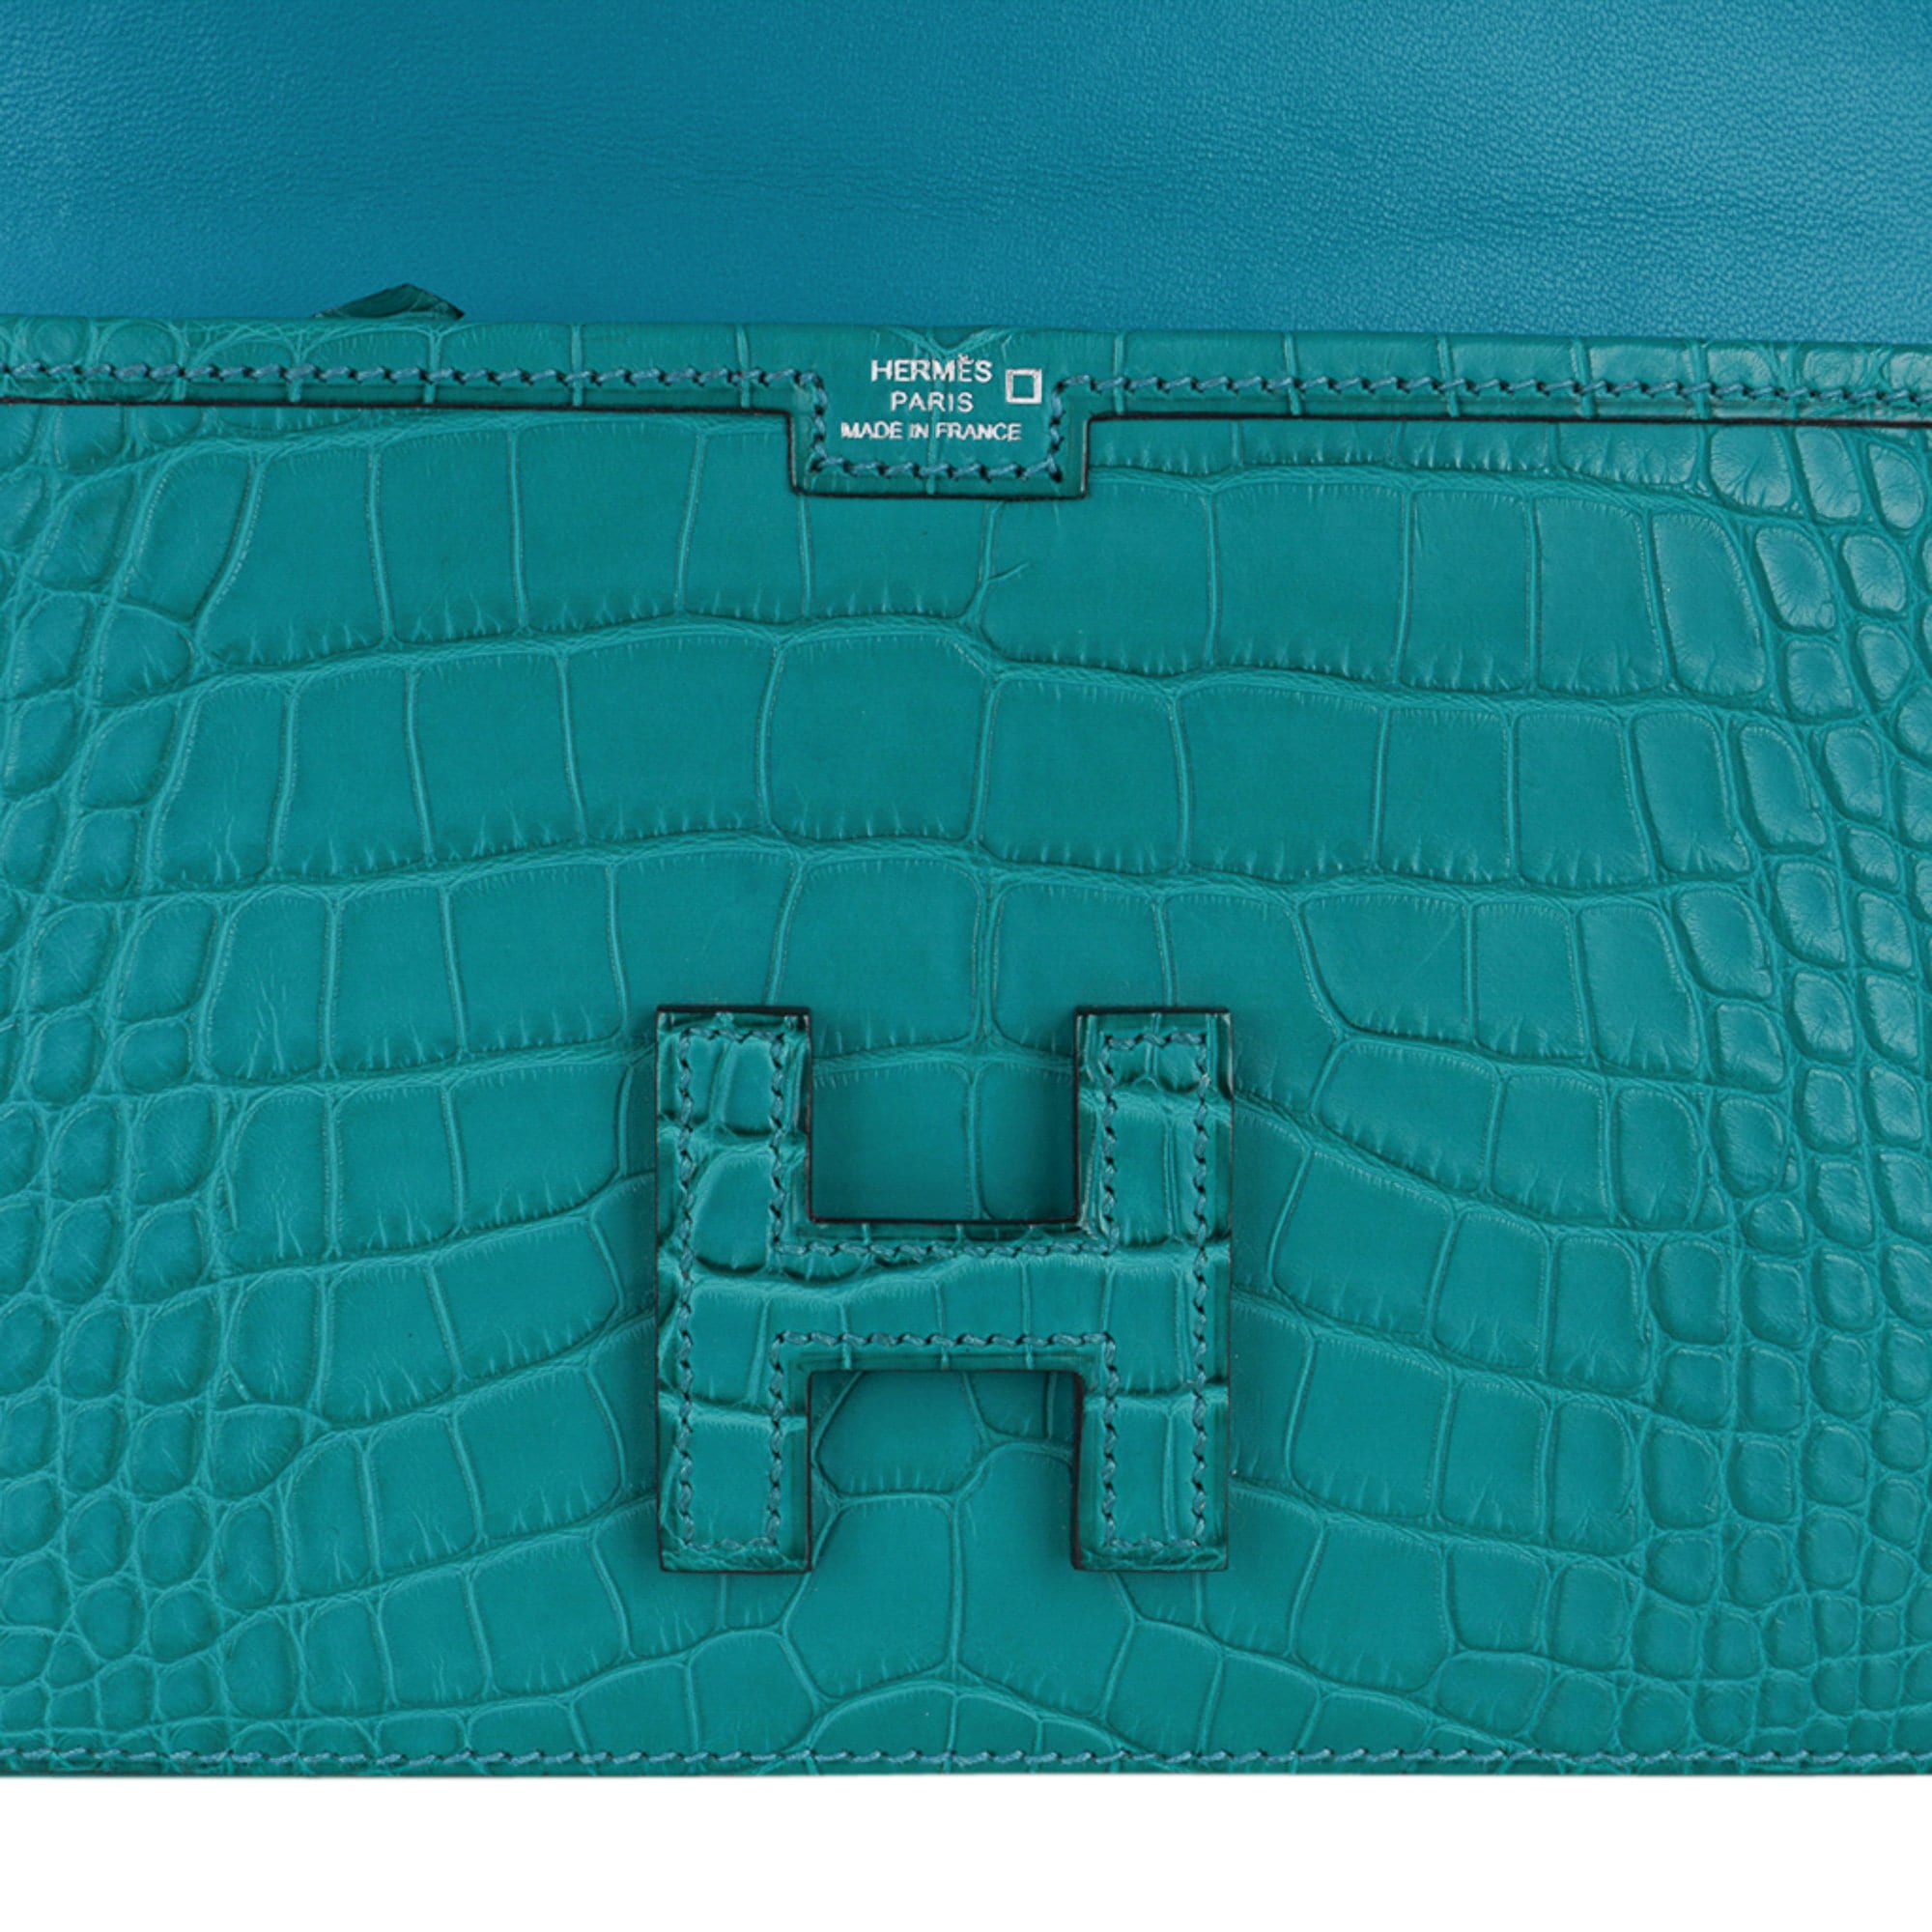 Hermès Wallet Guide, Handbags and Accessories